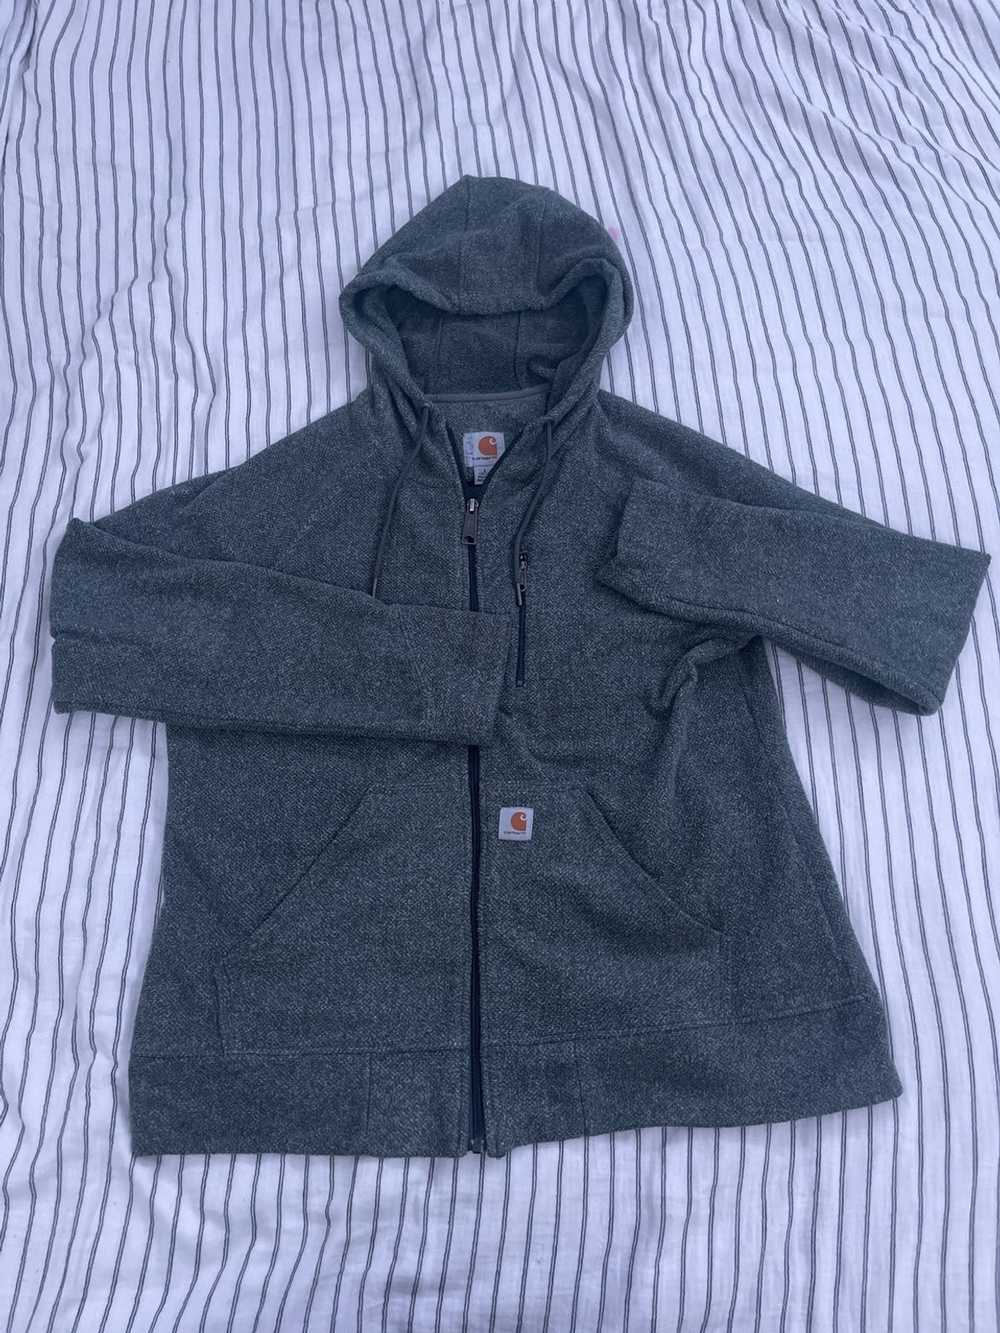 Carhartt Carhartt zip-up hooded jacket - image 1